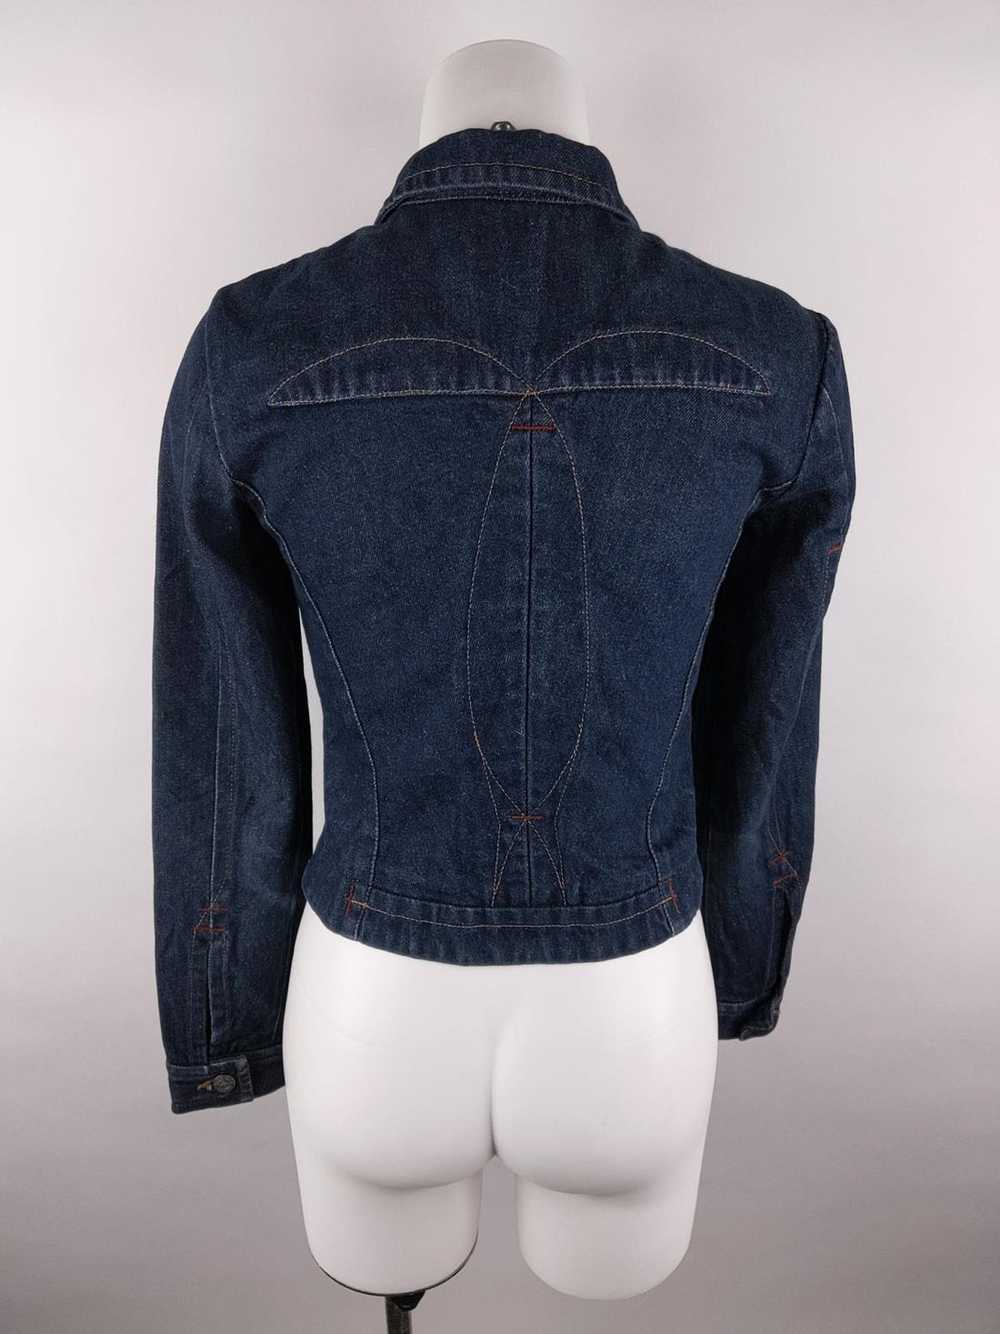 BCBG Max Azria Jeans Denim Jacket - image 2